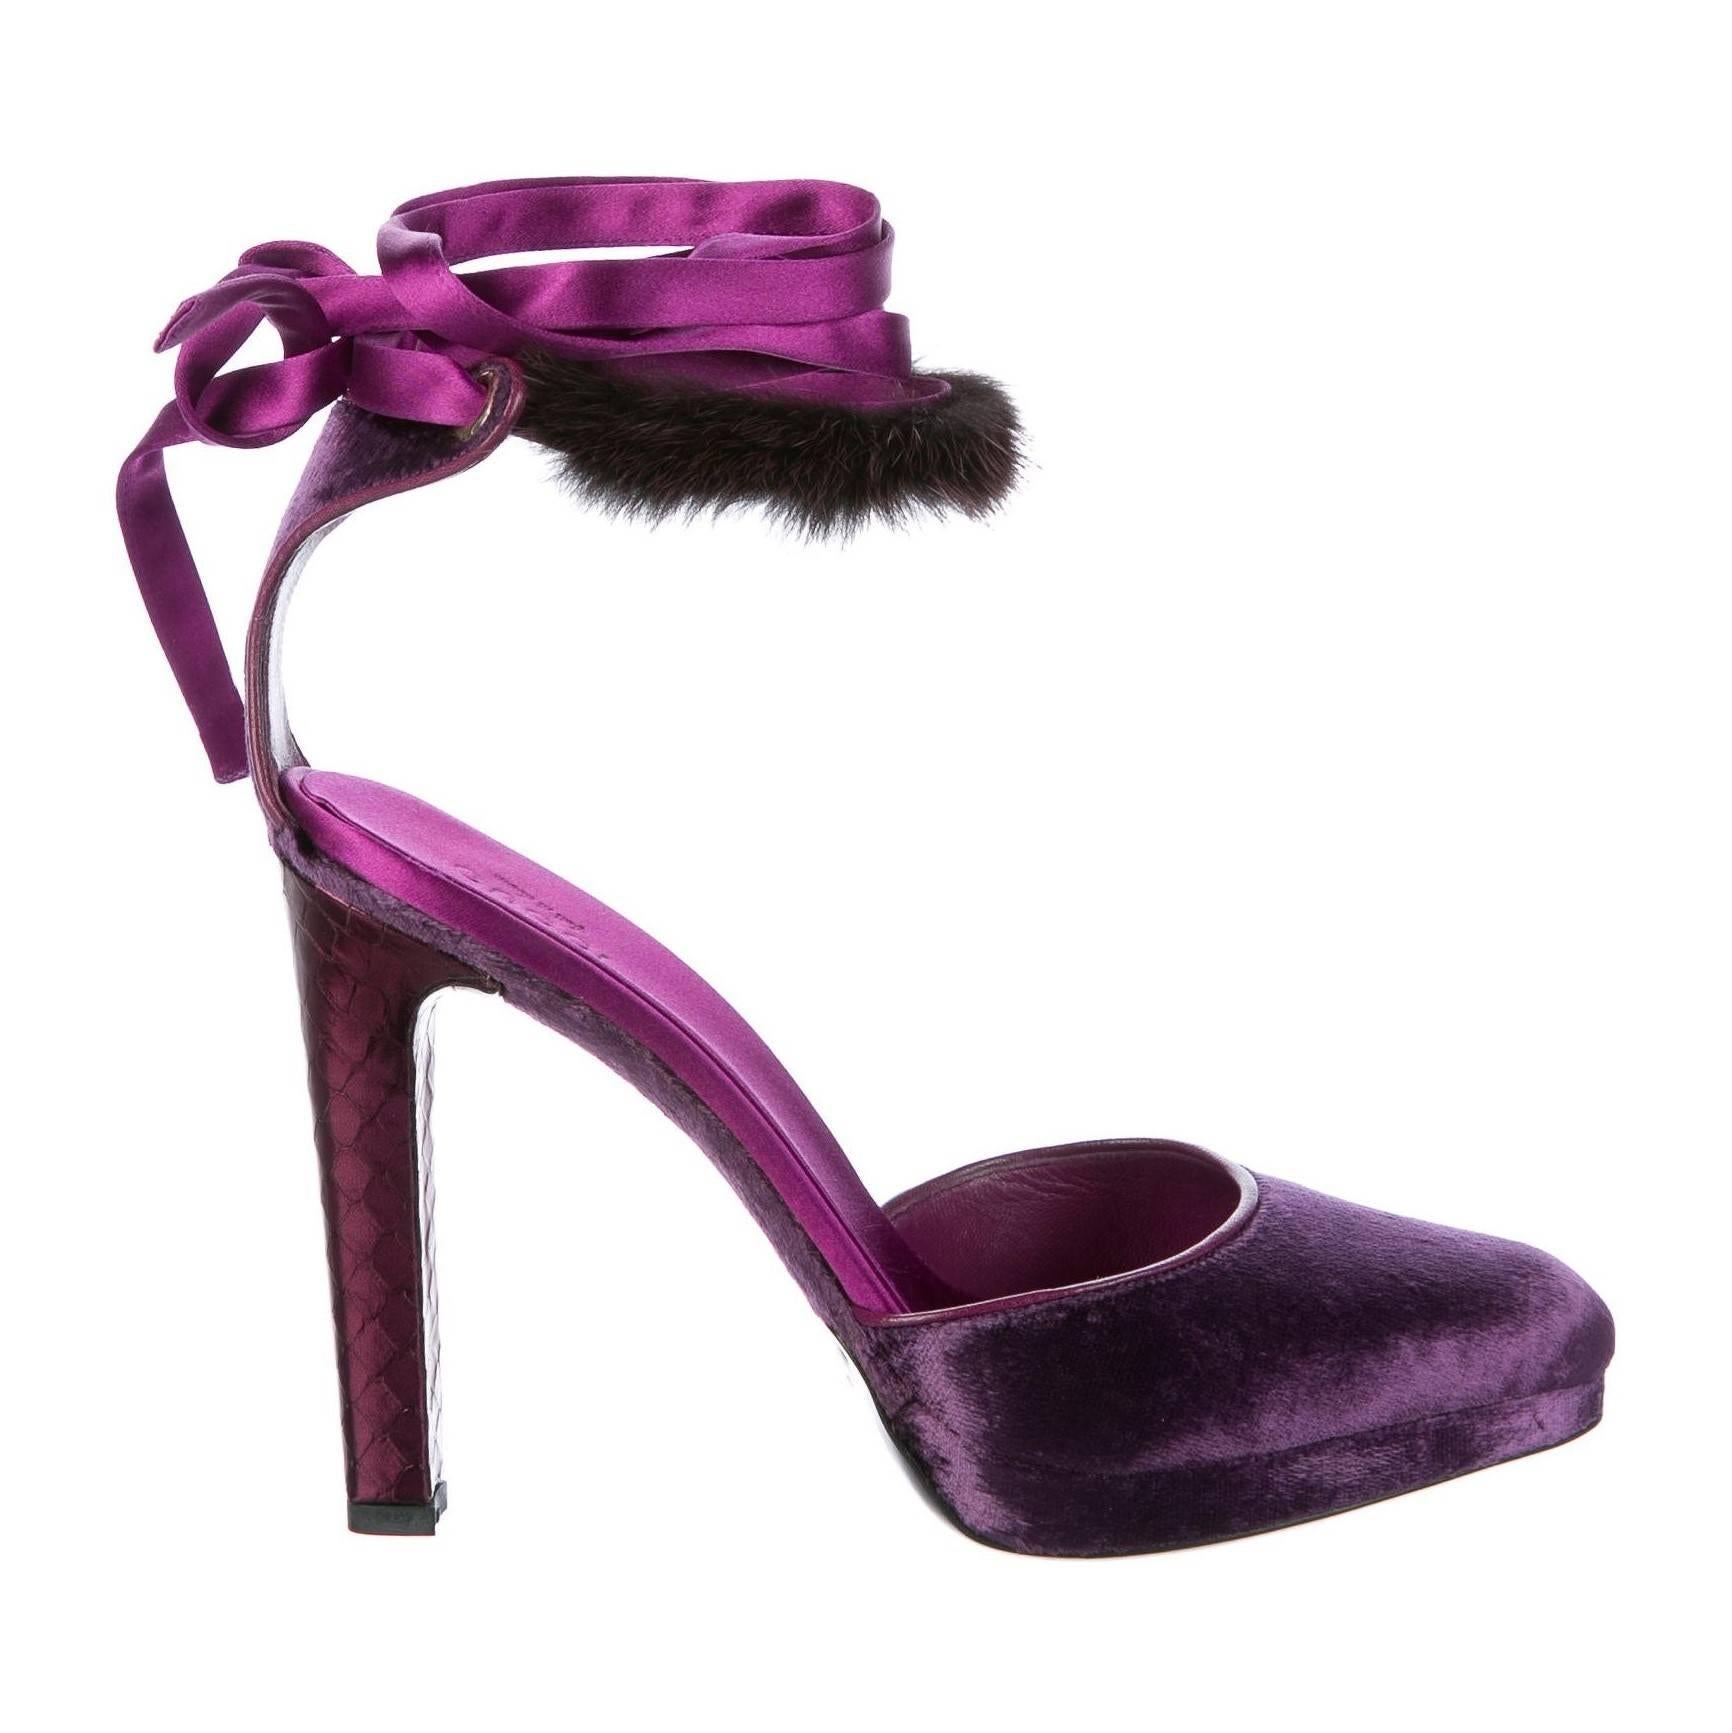 Tom Ford for Gucci Mink Python Heels
Brand New
U.S. Size: 9.5
* Mink, Satin, Python and Velvet heels
* Tom Ford's 